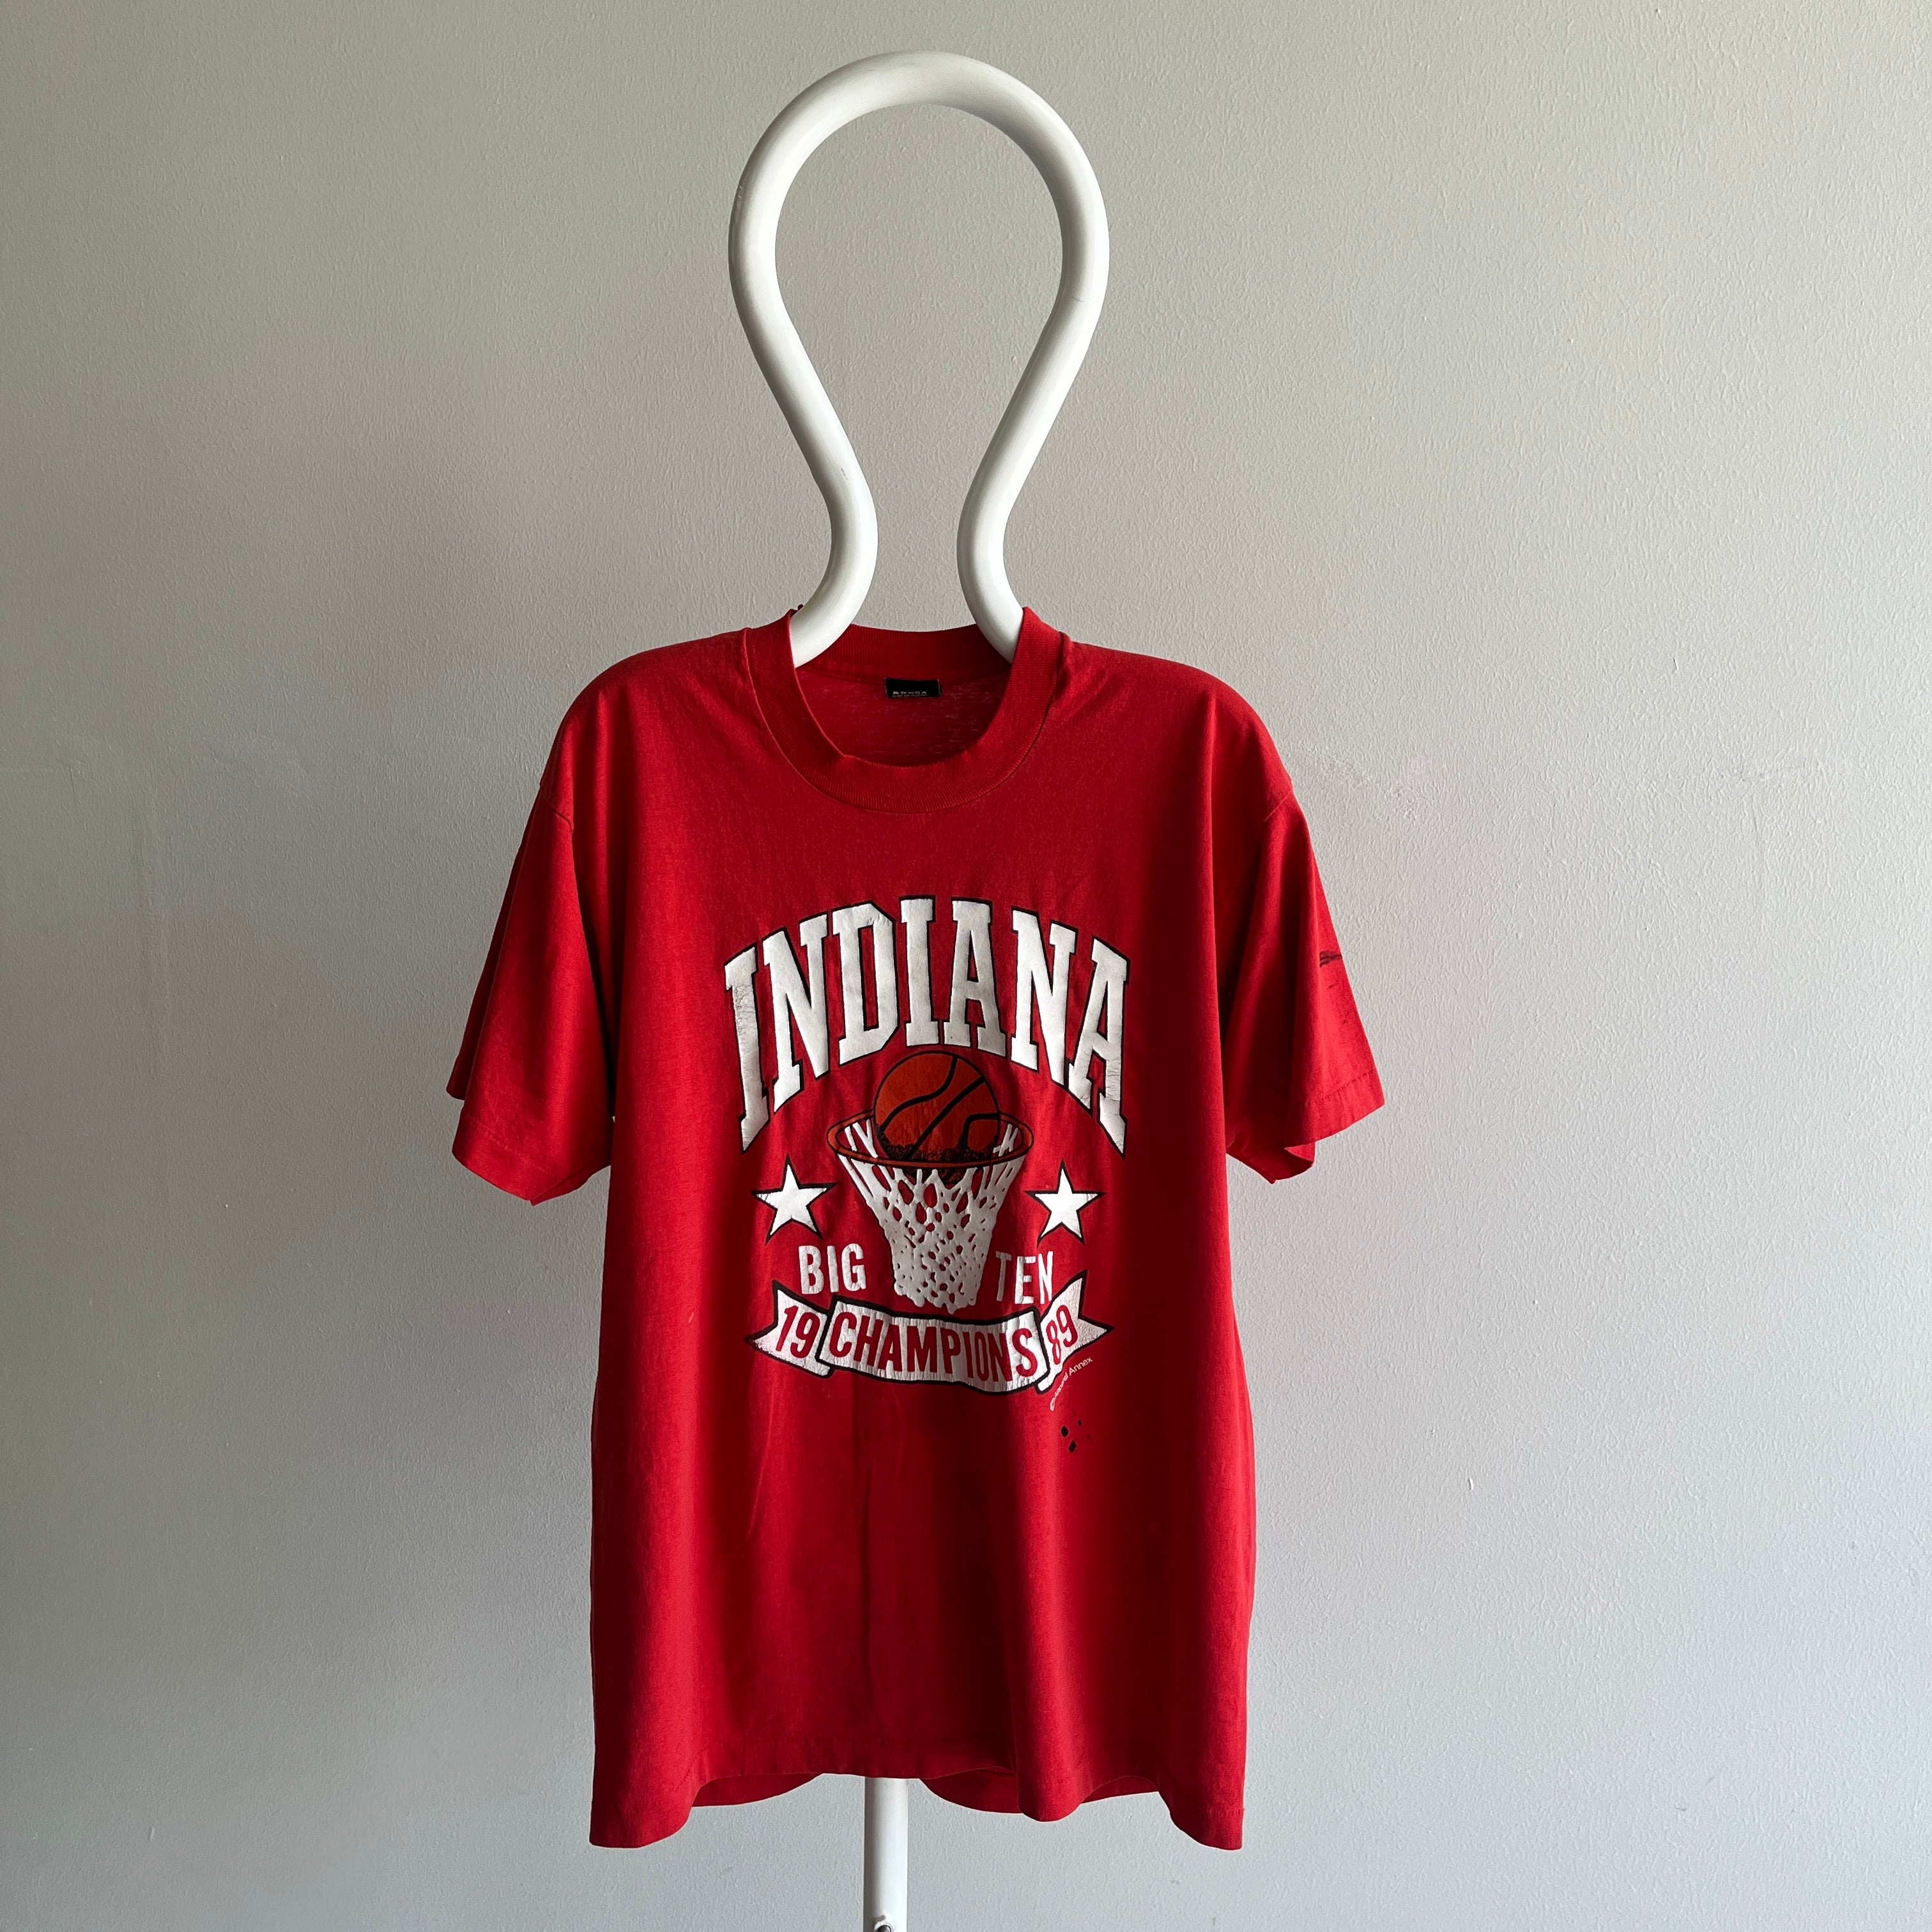 1989 Indiana Big Ten Championships T-shirt par Screen Stars